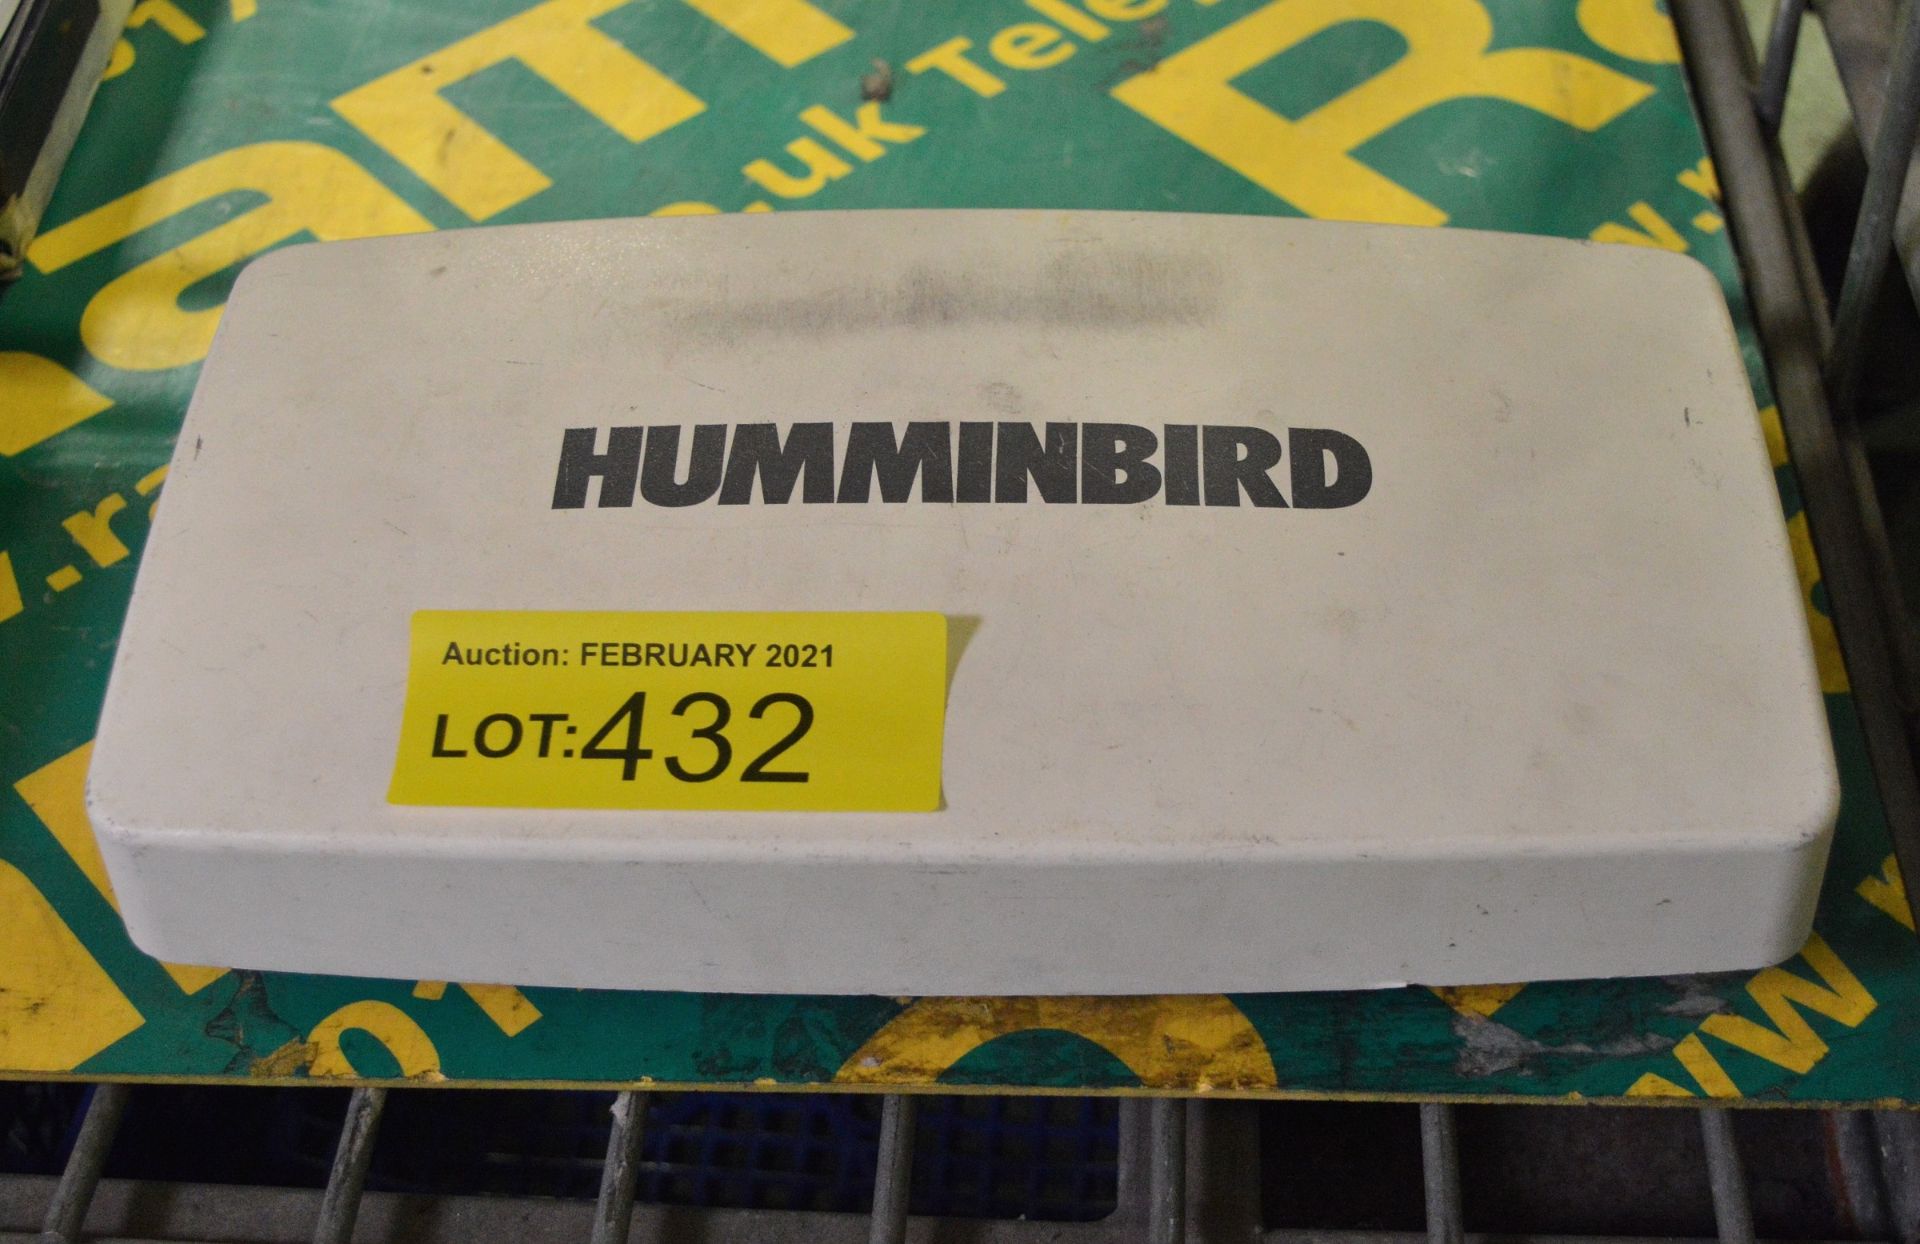 Humminbird Sonar Side Scan Unit